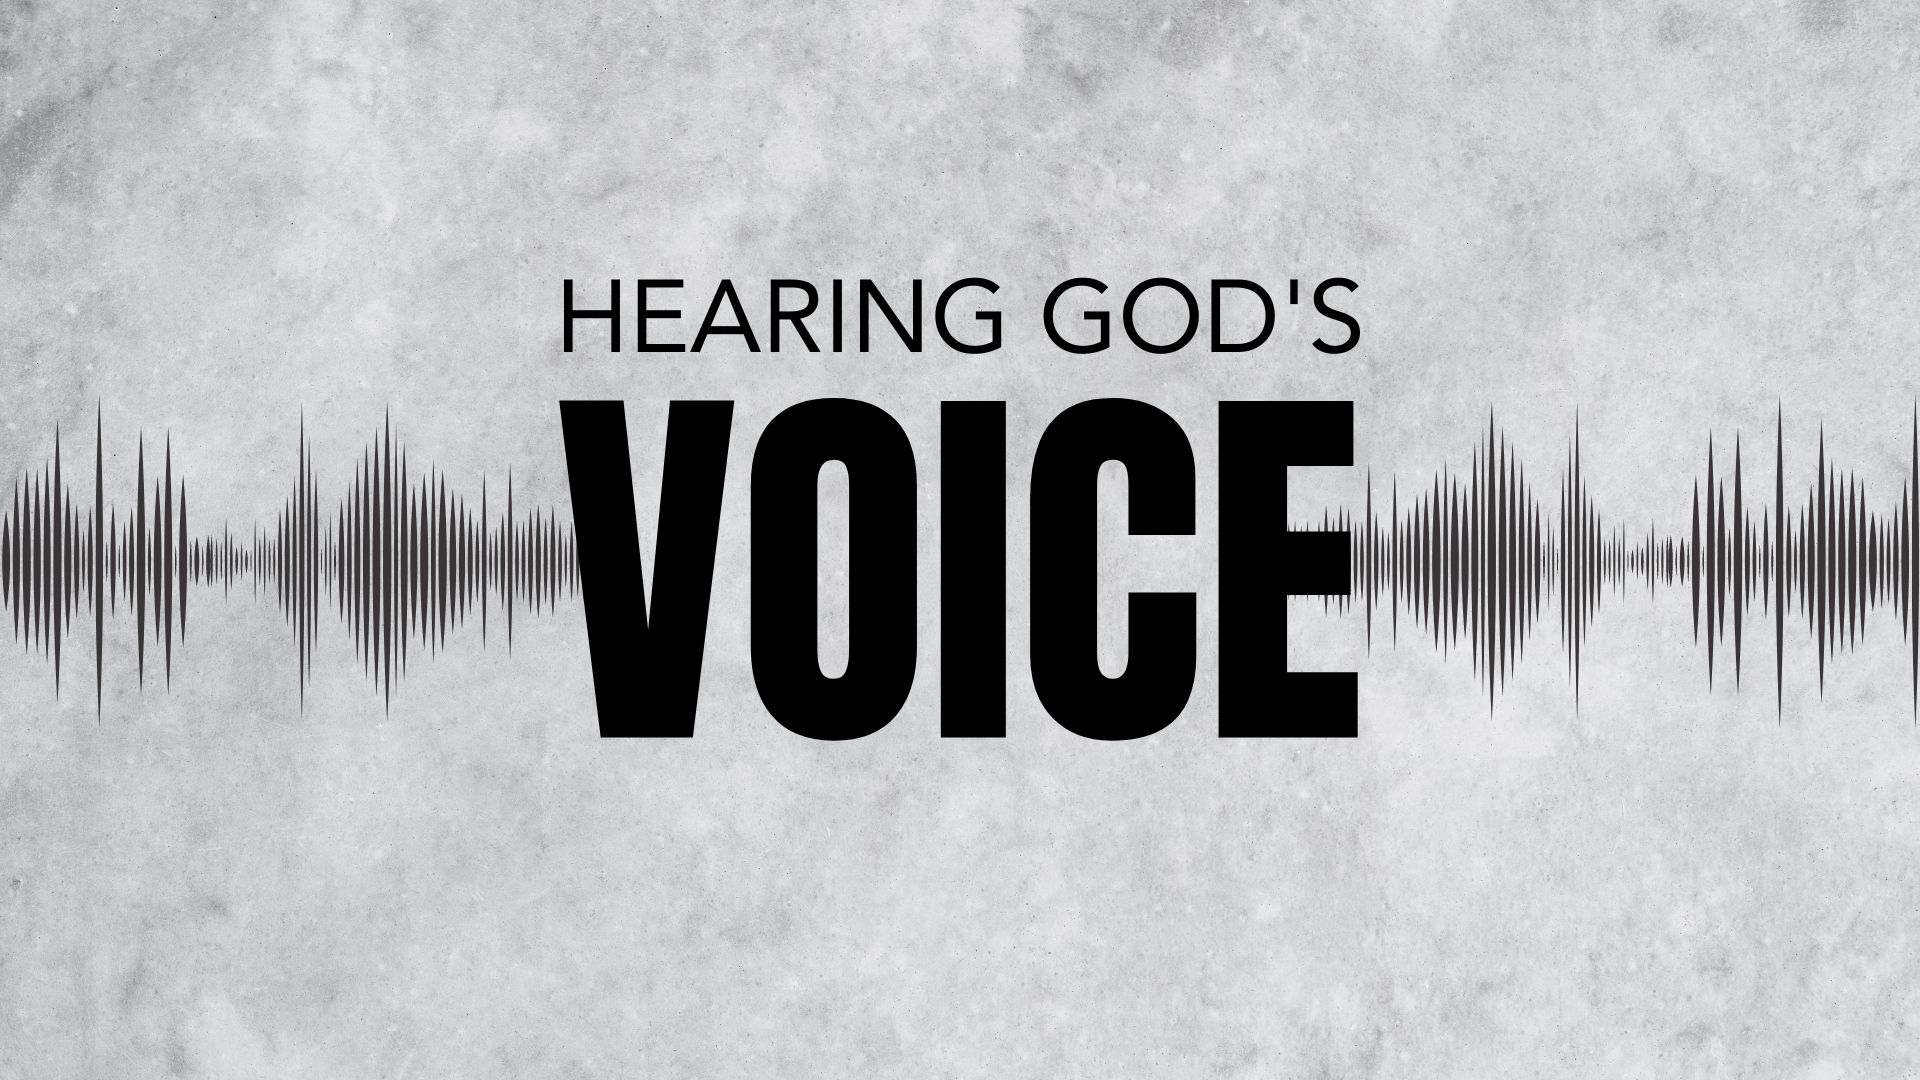 HEARING GOD’S VOICE